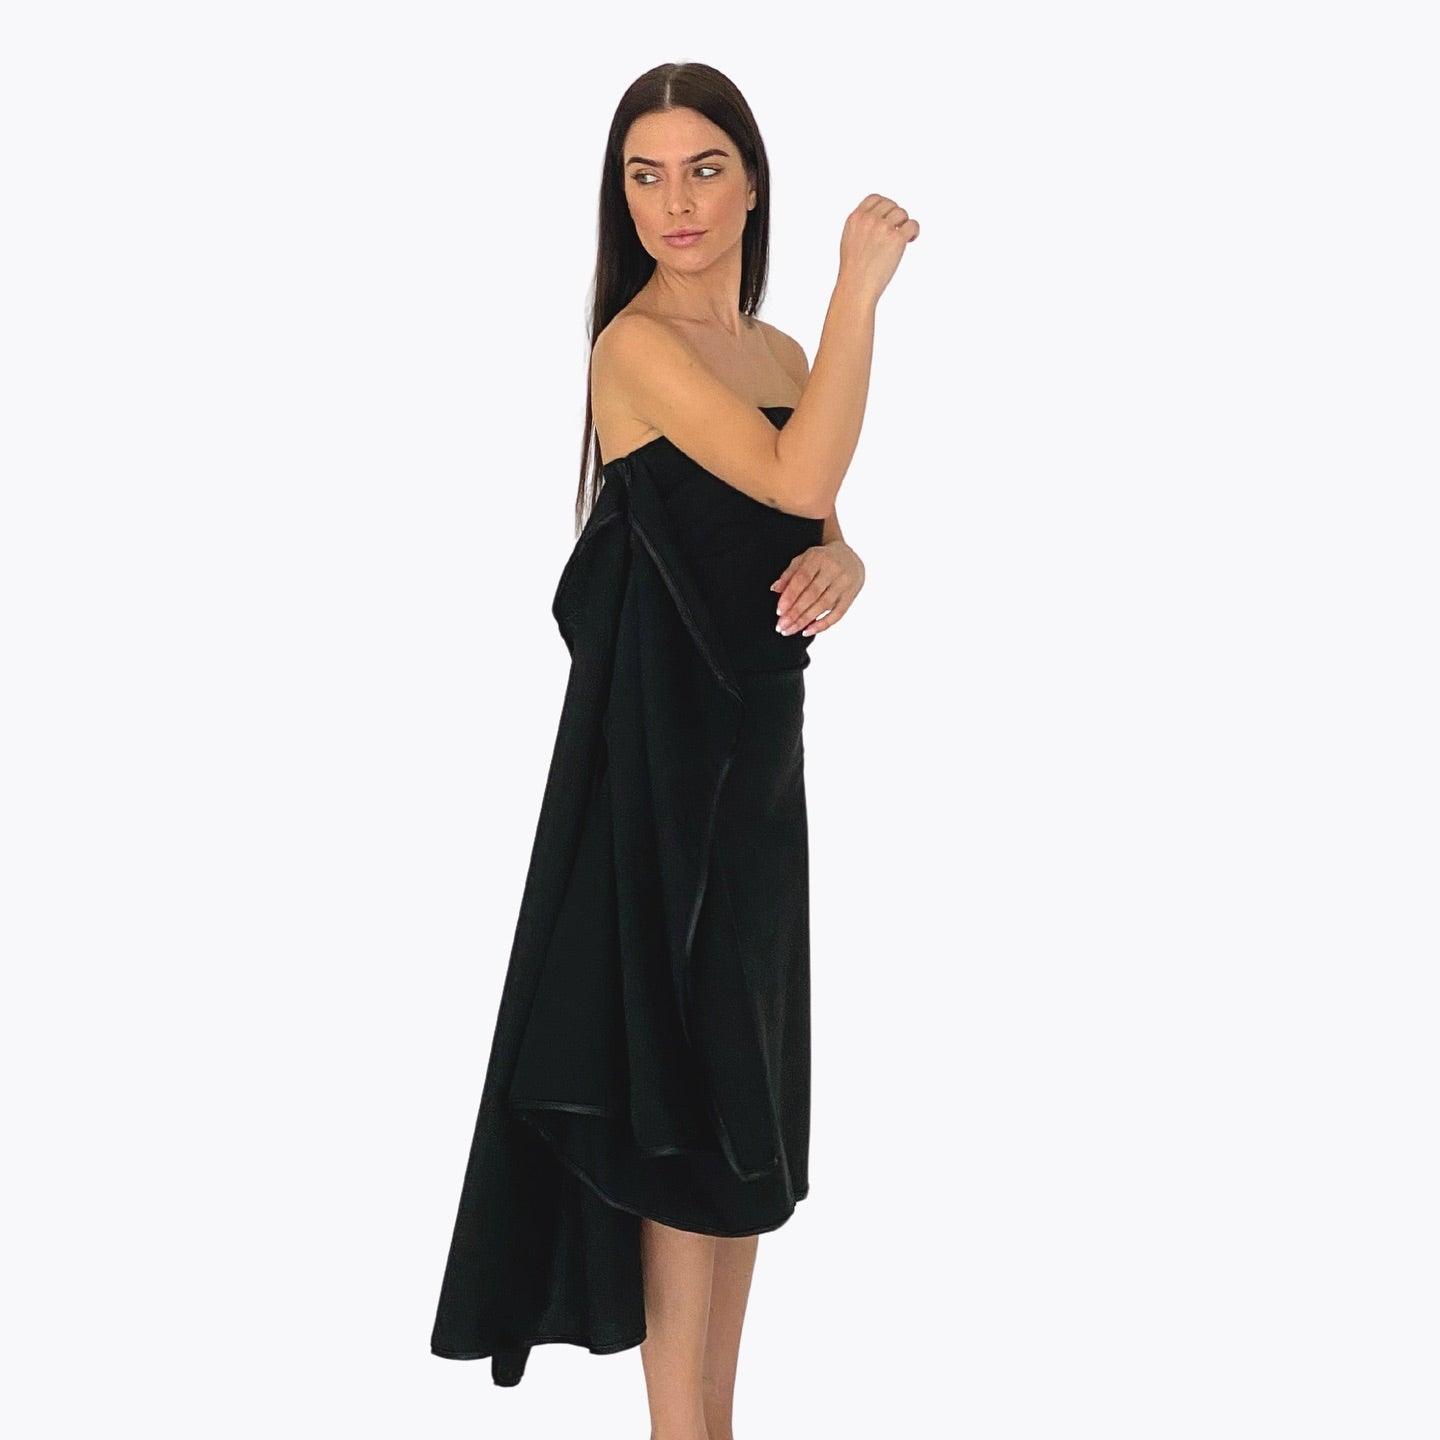 ROLA'S CLOSET - Satin Strapless Dress - FLTRD UAE